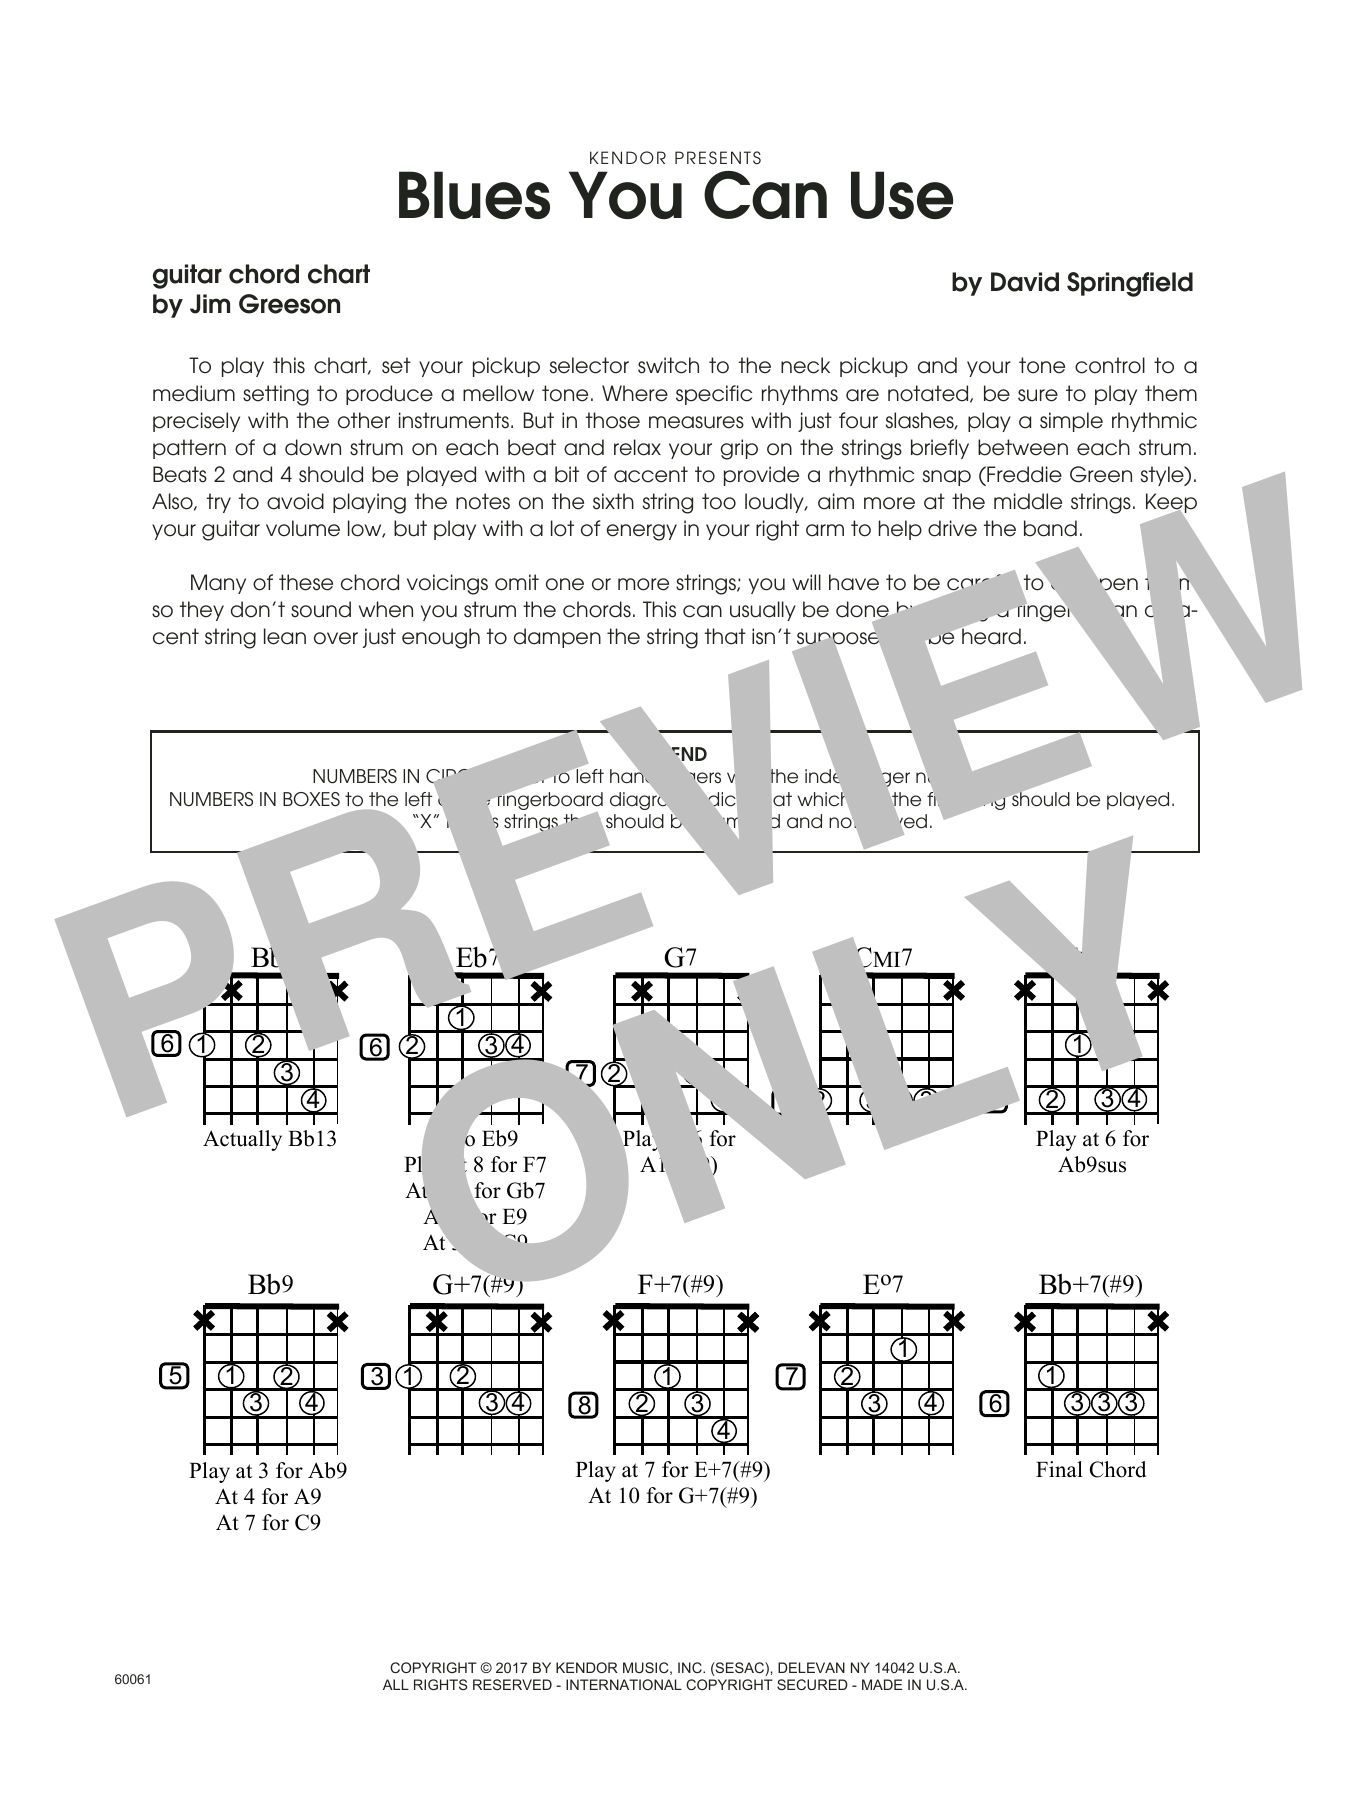 Download David Springfield Blues You Can Use - Guitar Chord Chart Sheet Music